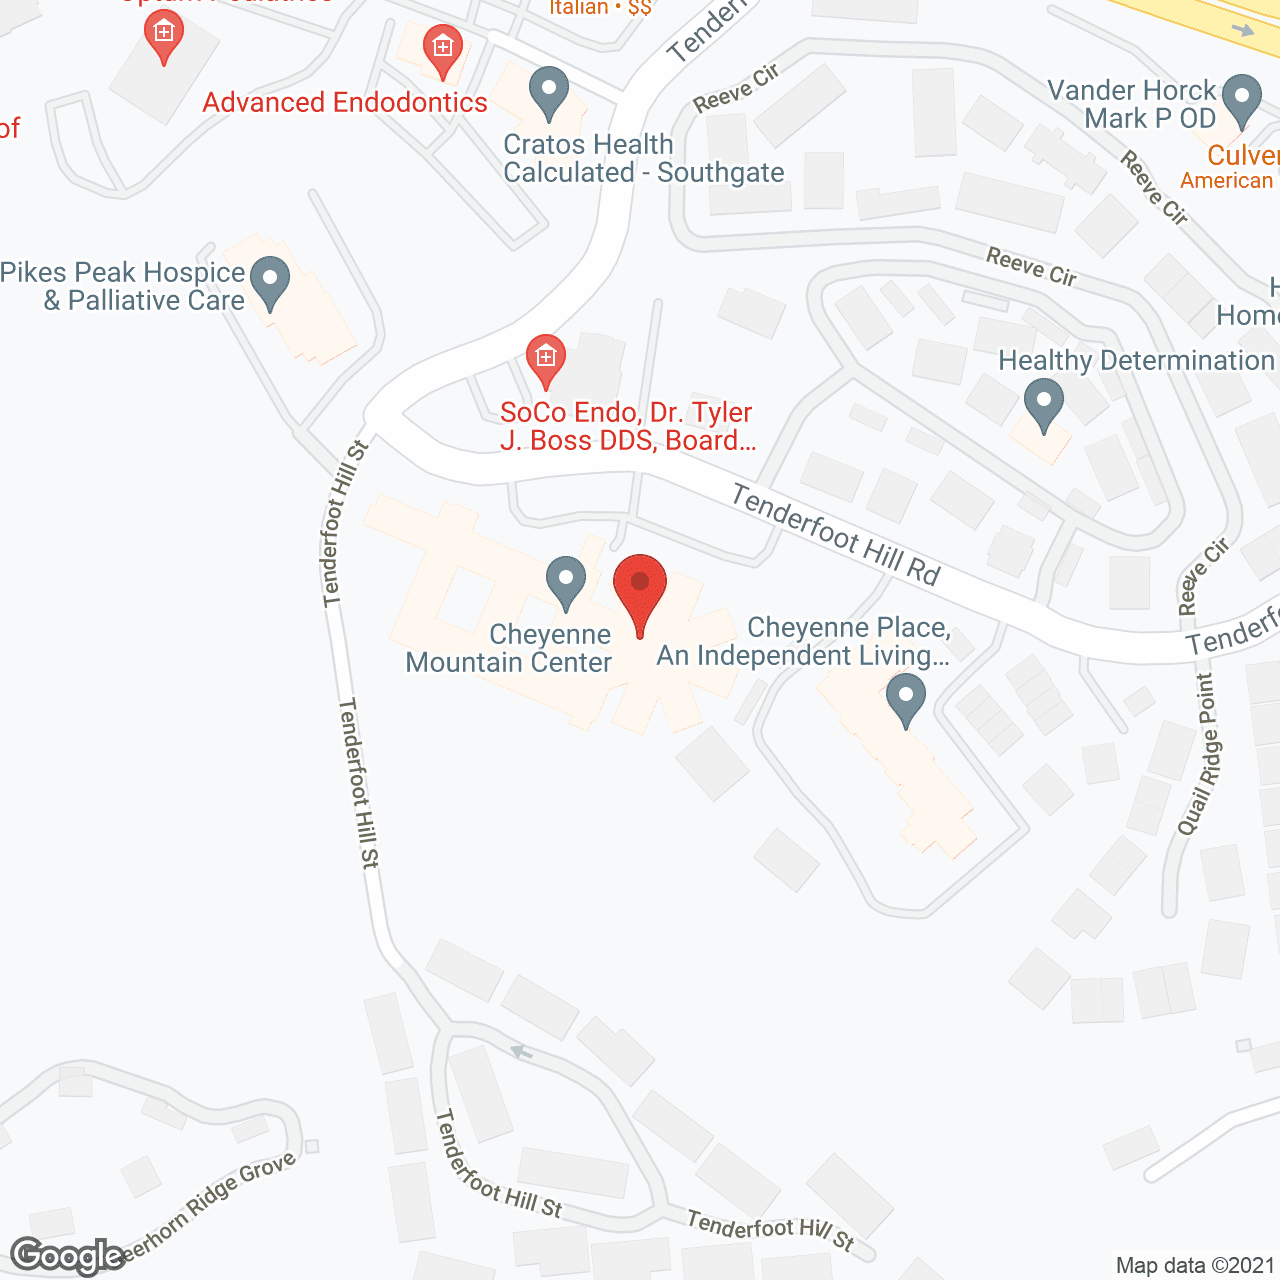 Cheyenne Mountain Care Center in google map